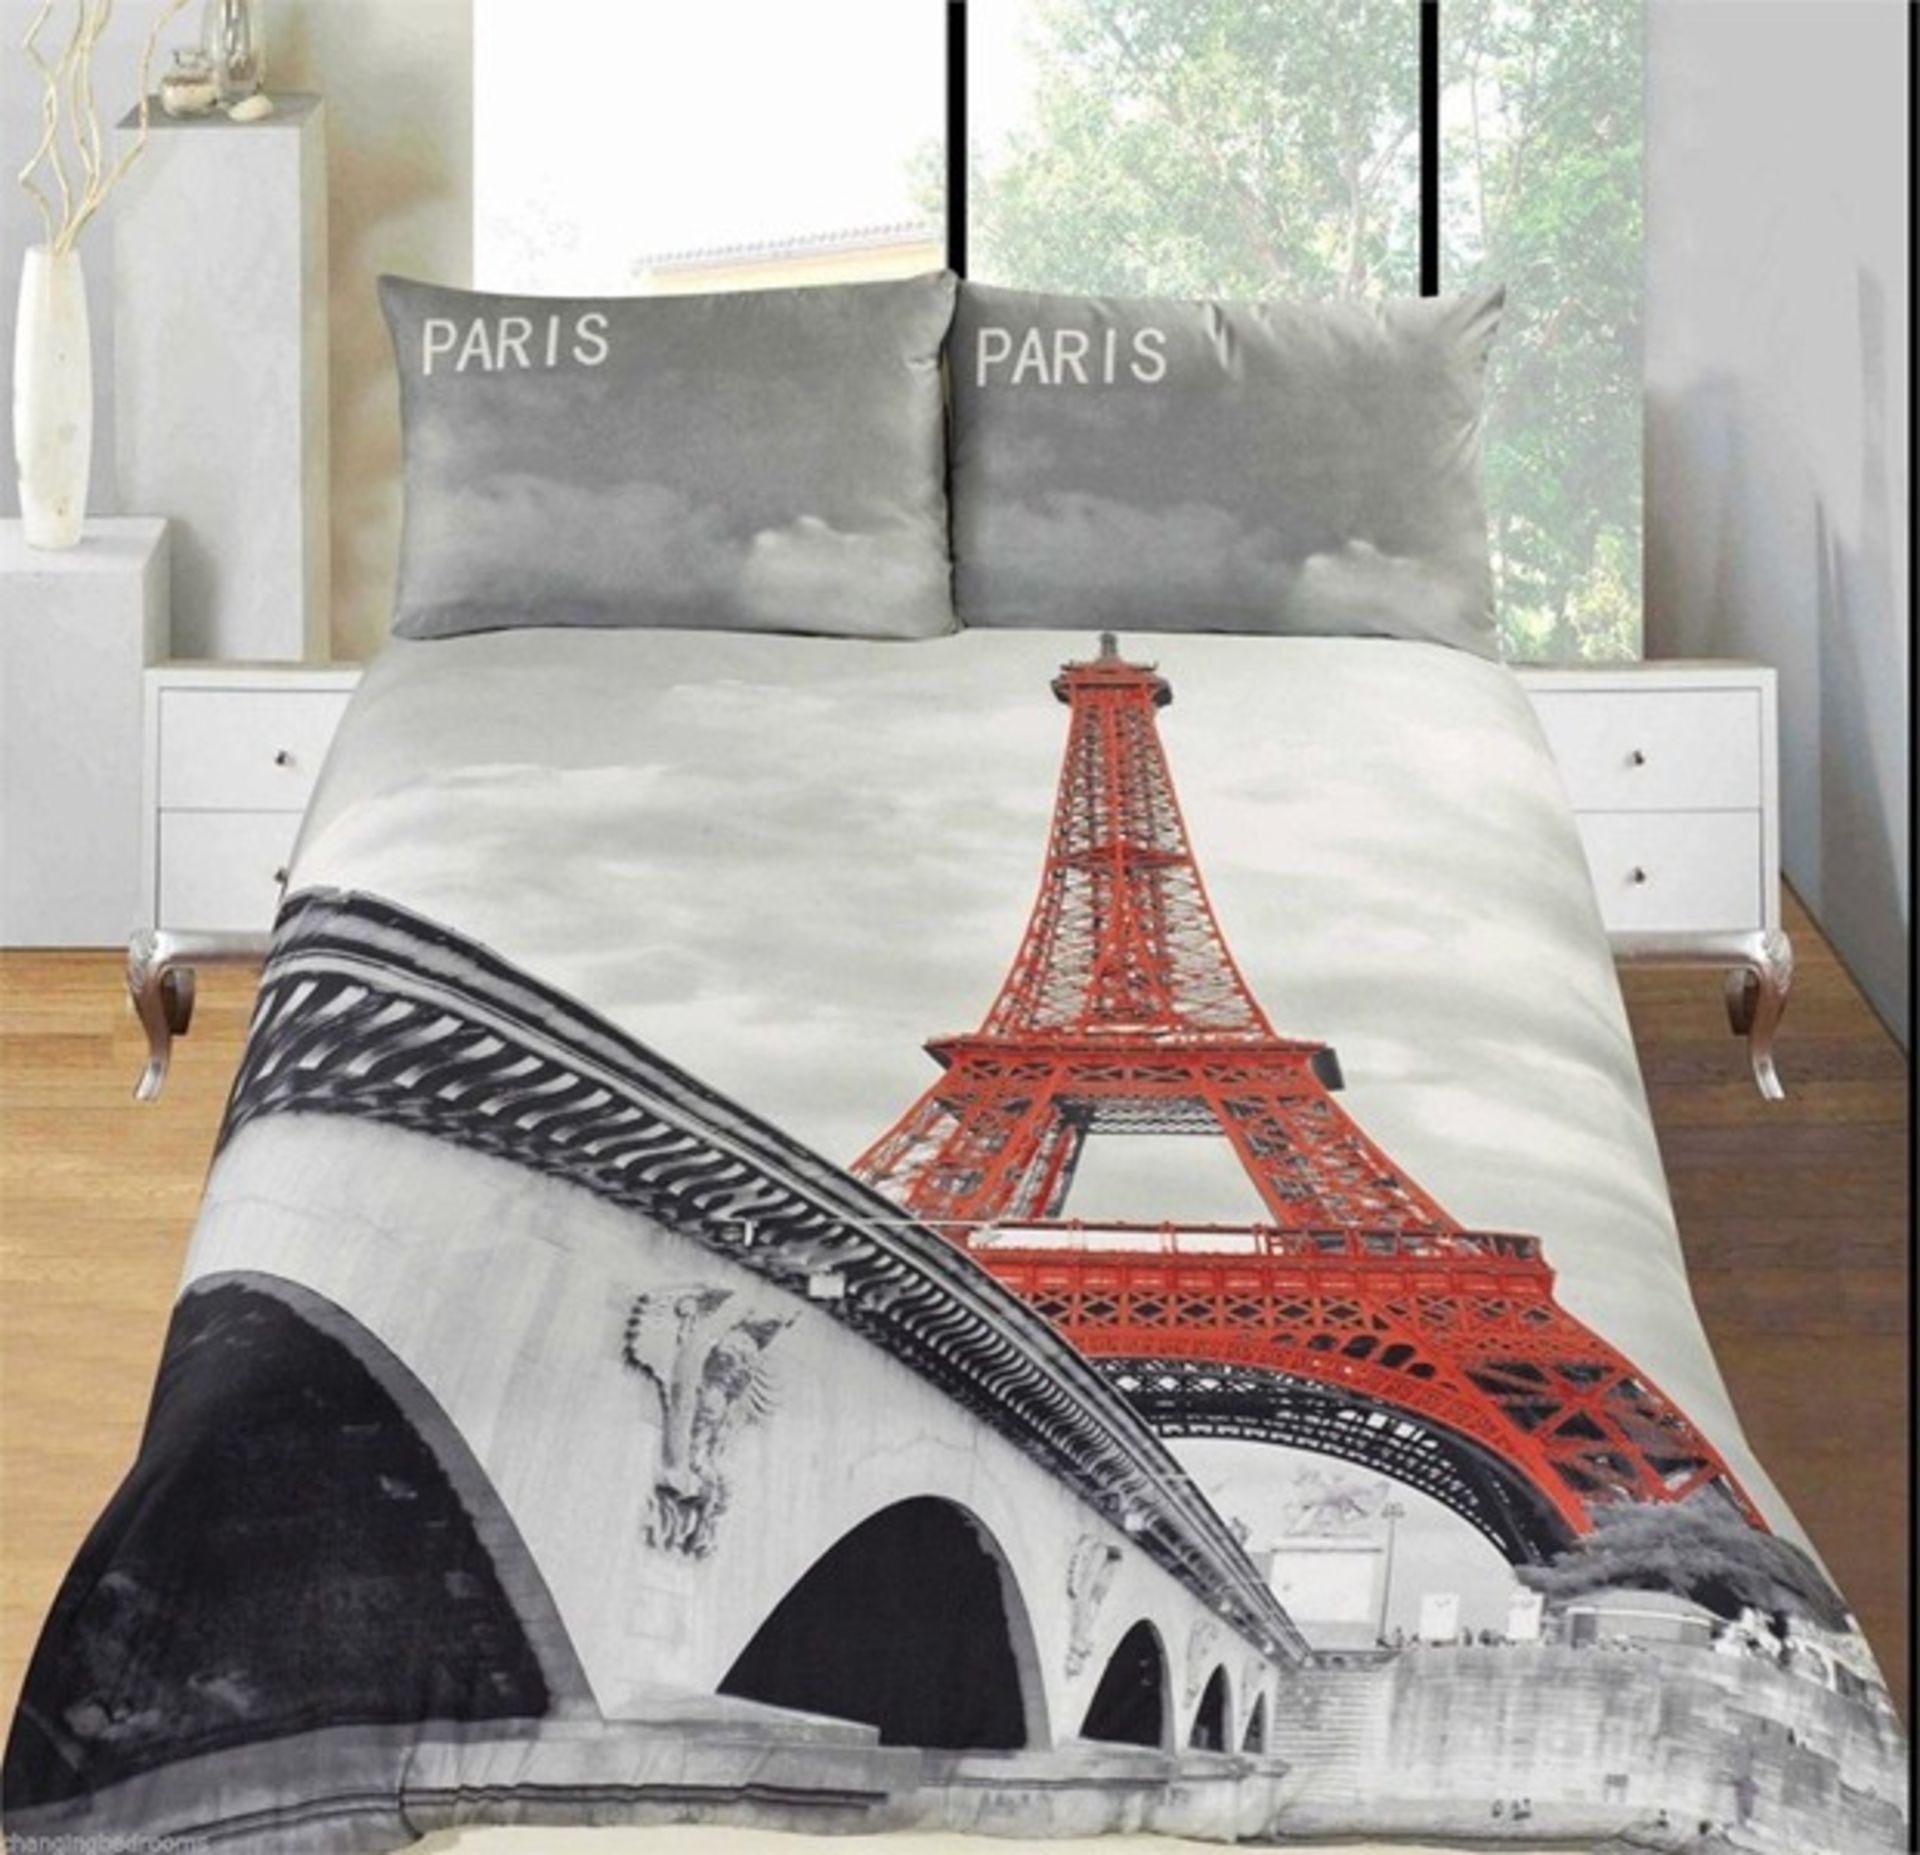 V Brand New 3 Piece Luxury King Size Duvet Set Incl 2 Pillow Cases In Paris Pattern SRP20.99 X 2